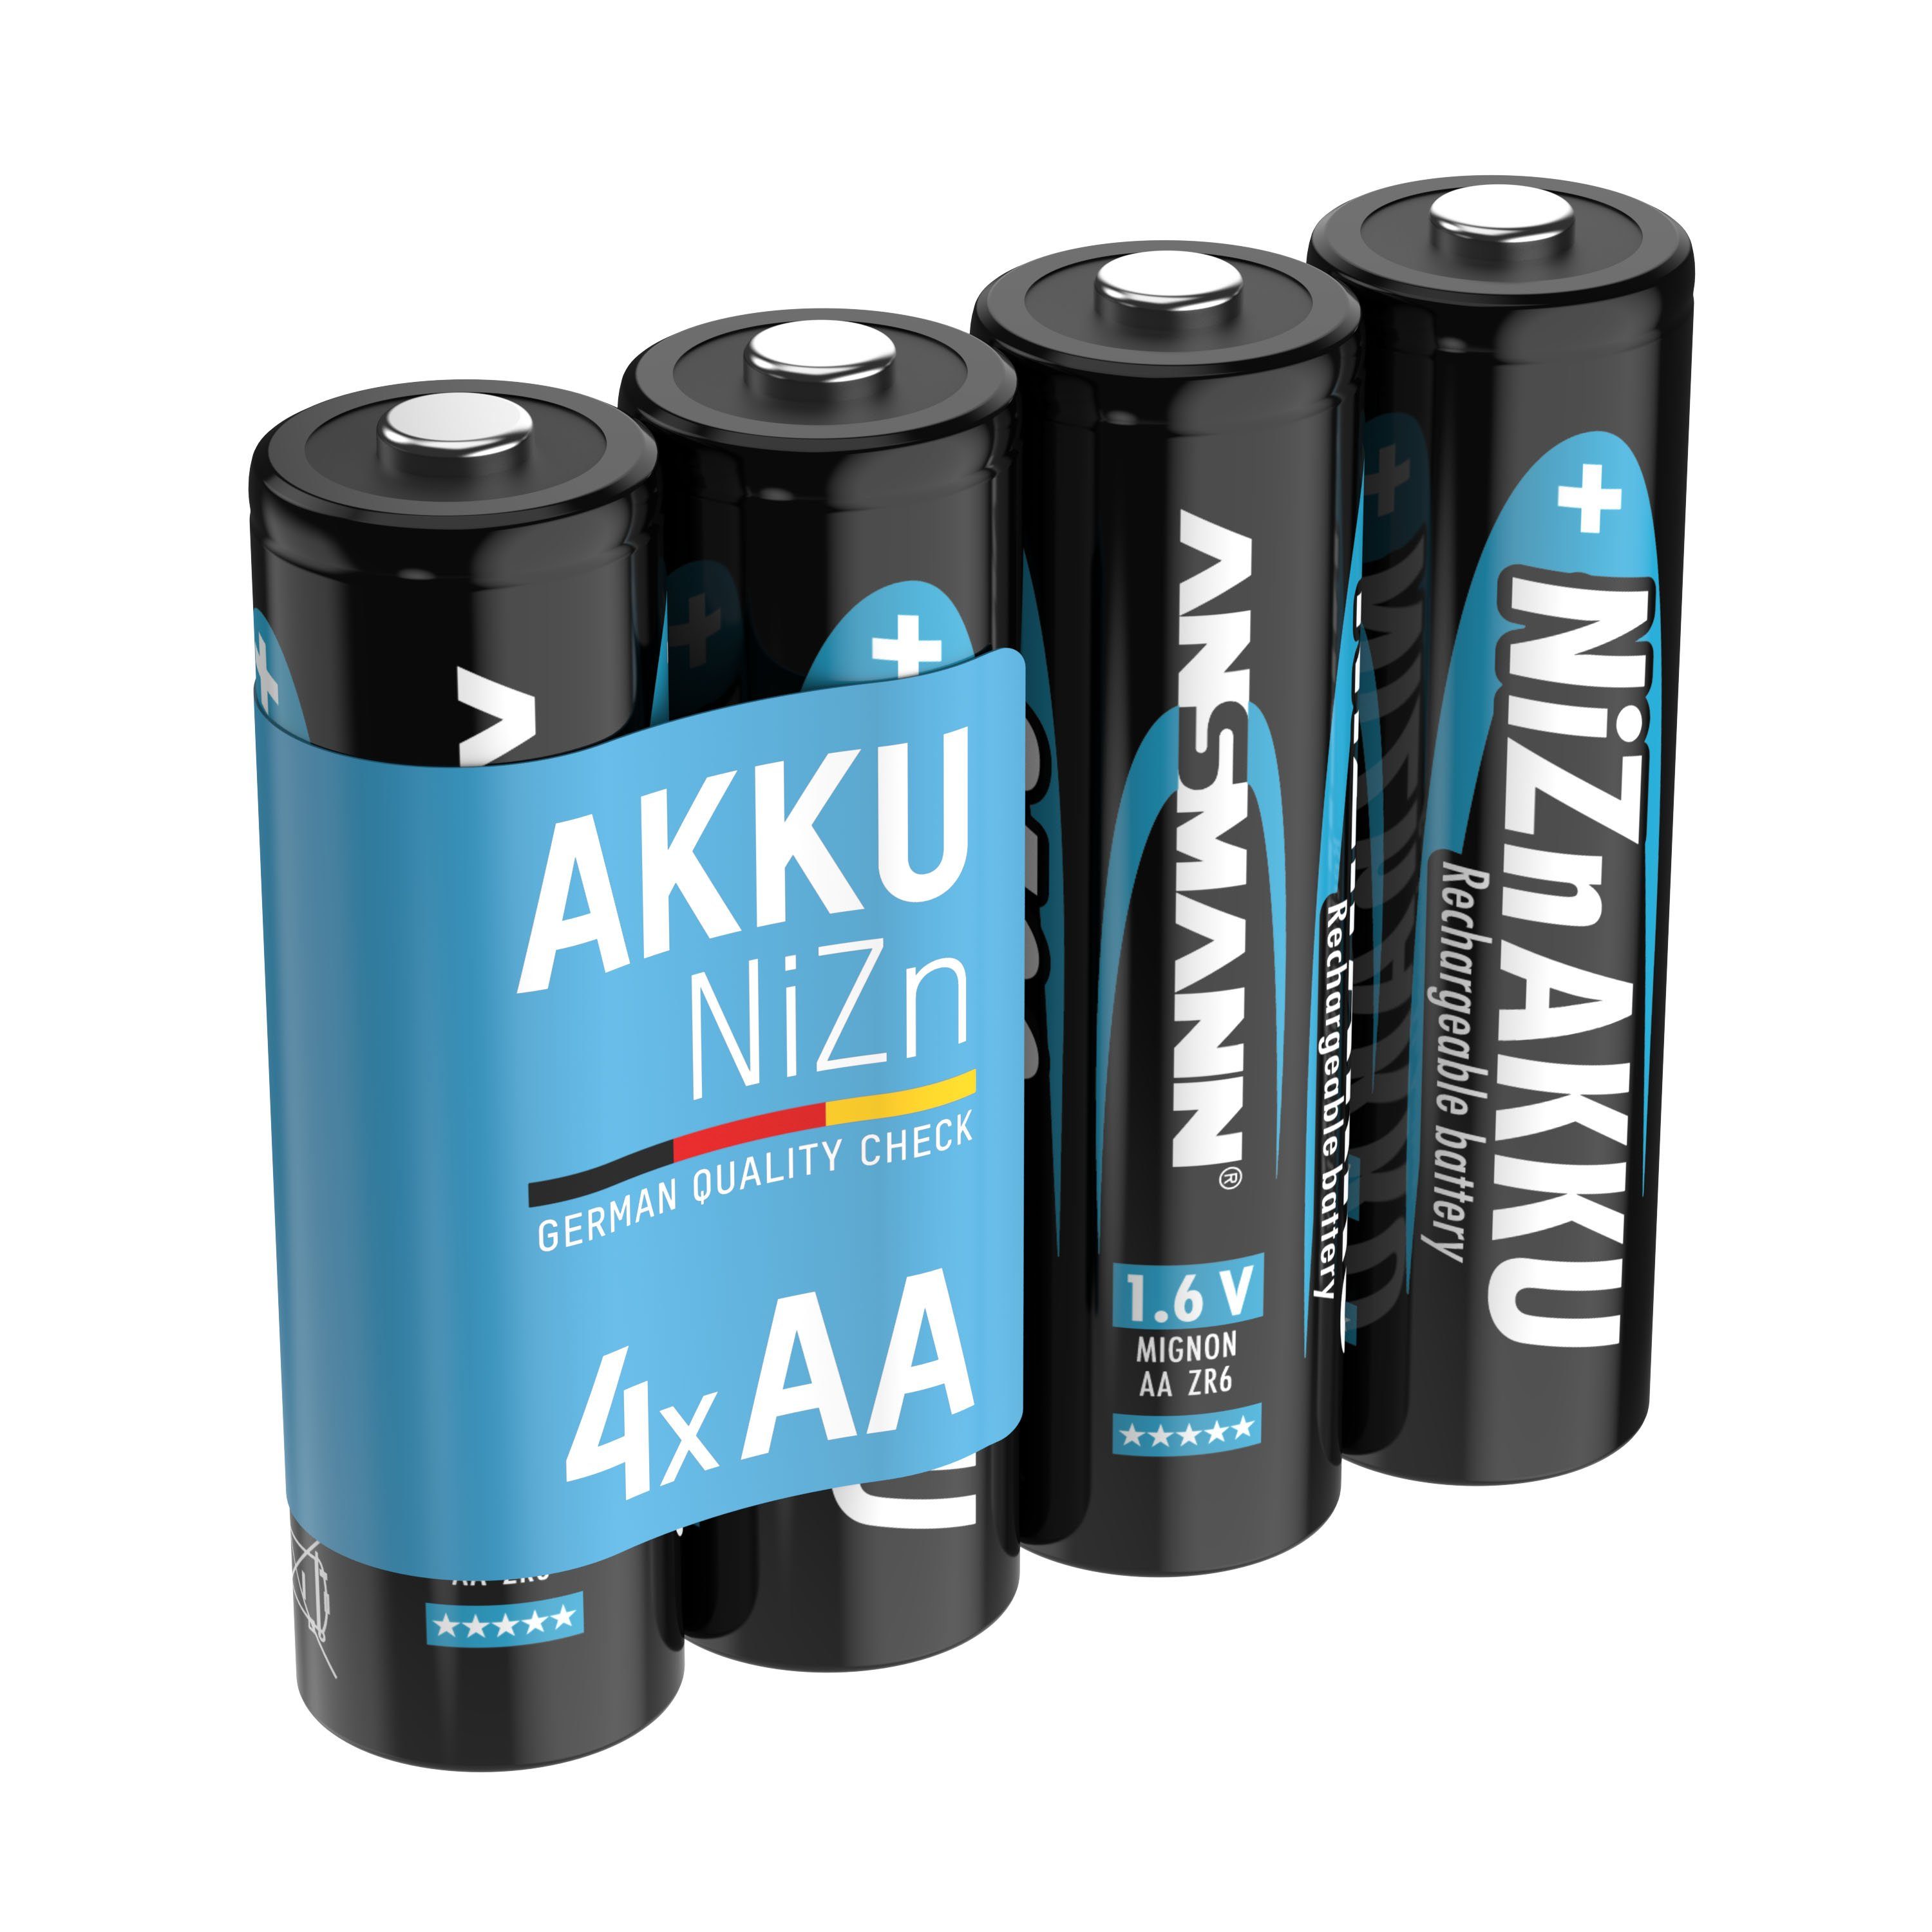 ANSMANN® Mignon NiZn Akku AA 1,6V 2500mWh, wiederaufladbare Batterien - 4 Stück Akku 1600 mAh (1.6 V)